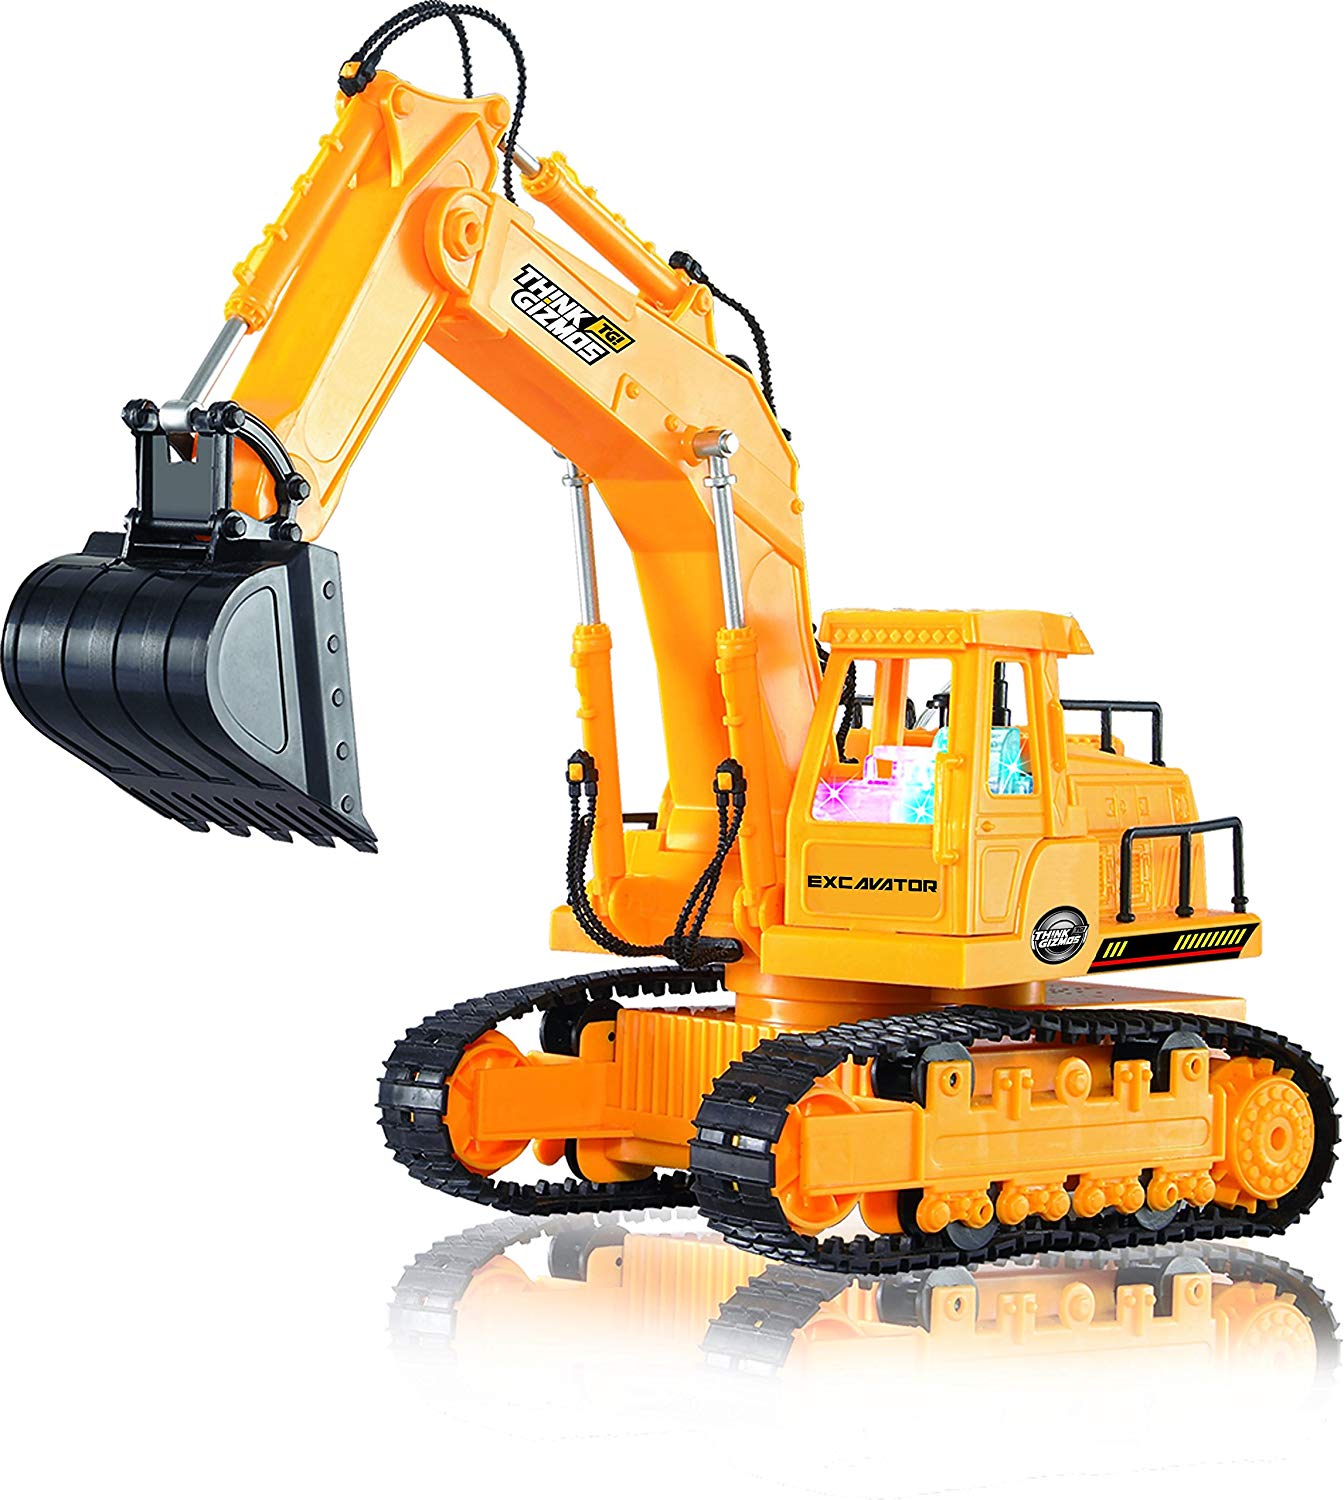 Amazon.com: Remote Control Toy Excavator Construction Vehicle TG643 ...